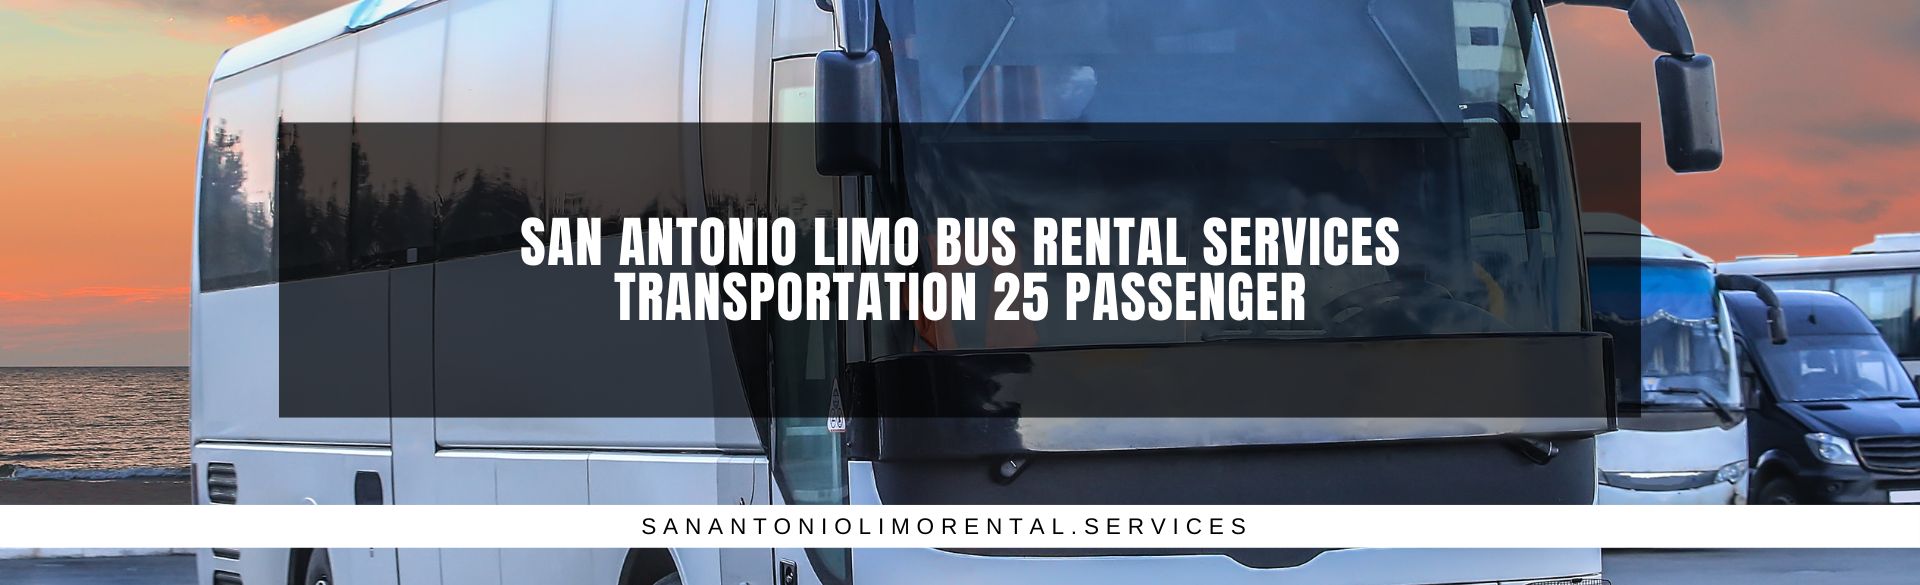 San Antonio Limo Bus Rental Services Transportation 25 passenger